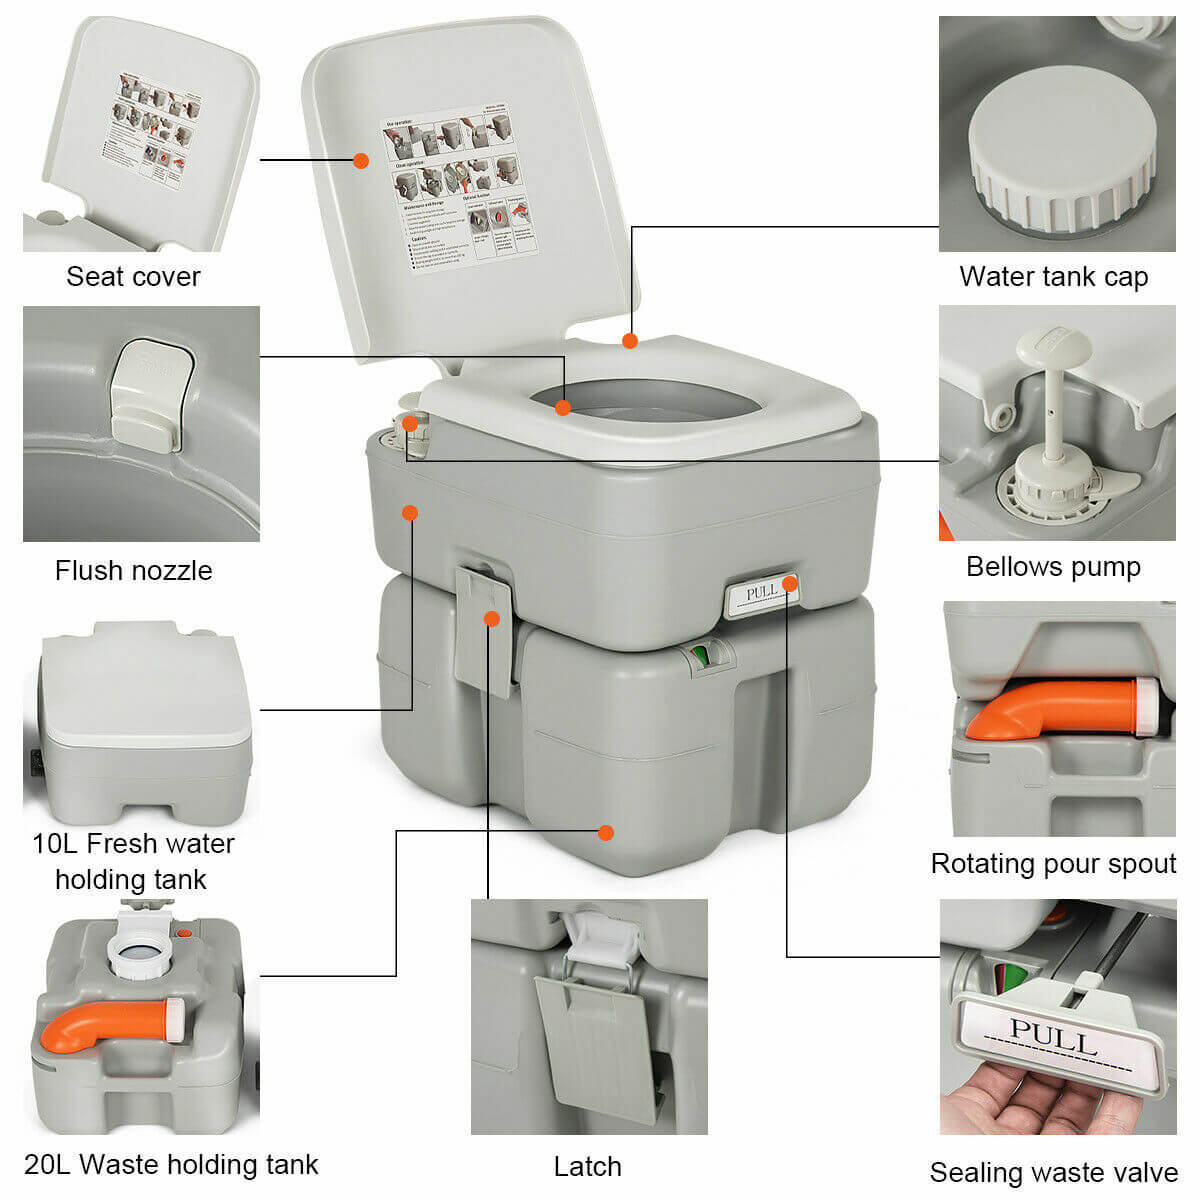 5.3 Gallon Portable Travel Toilet with Piston Pump Flush, Light Gray at Gallery Canada